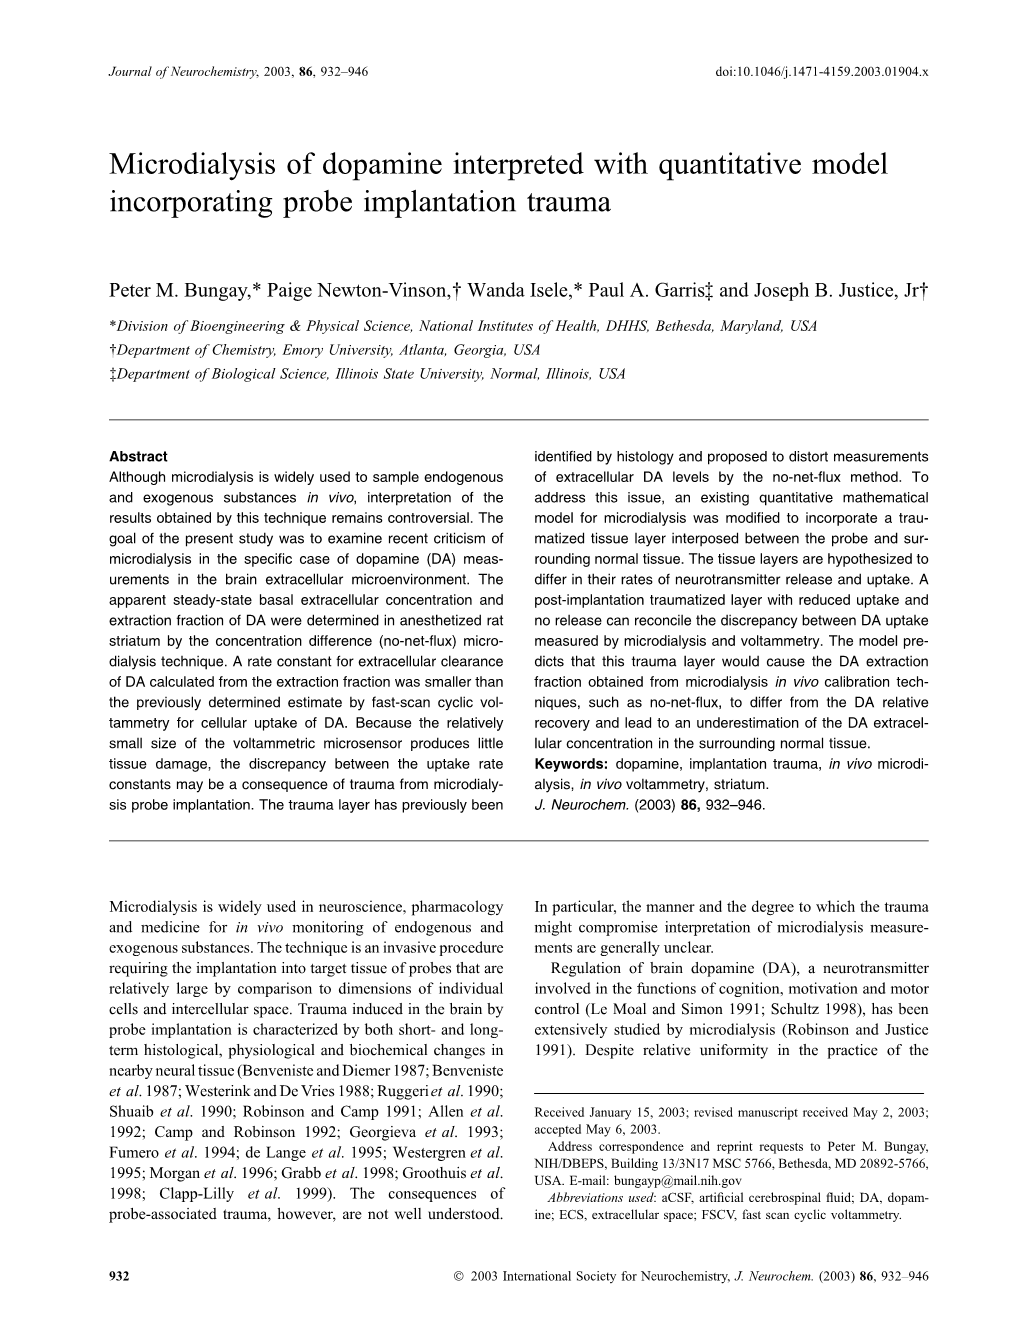 Microdialysis of Dopamine Interpreted with Quantitative Model Incorporating Probe Implantation Trauma